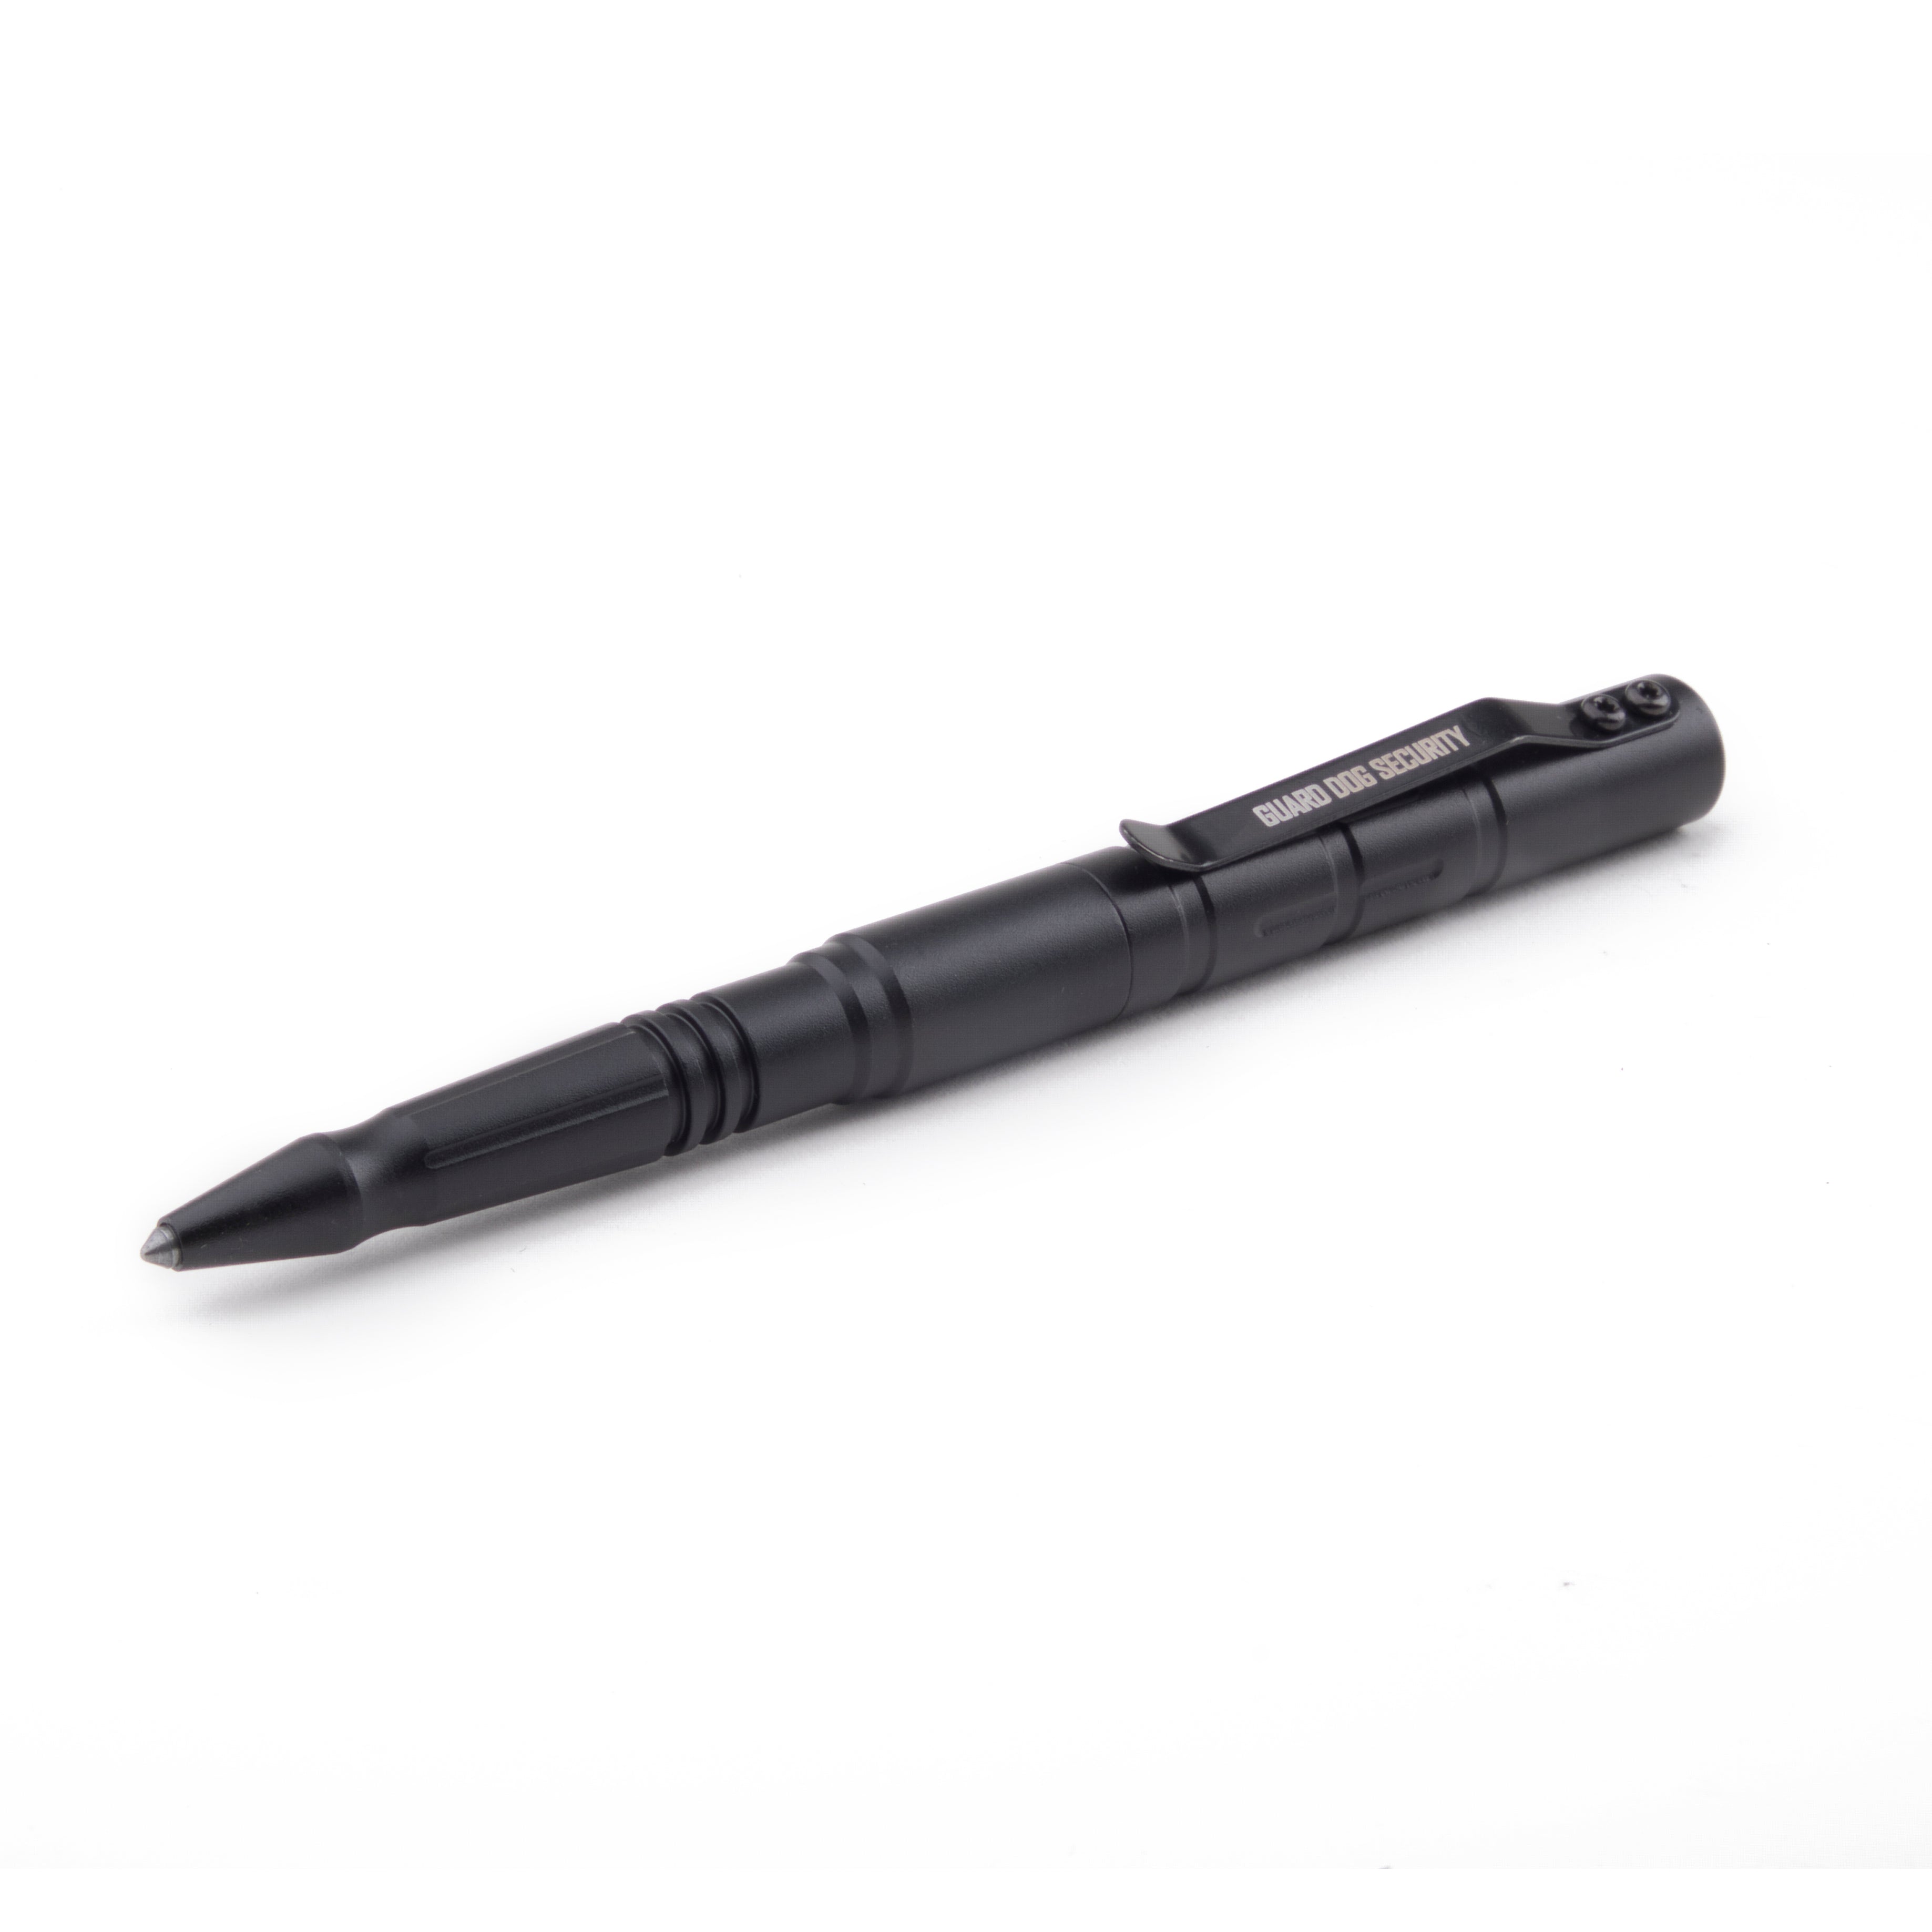 Tactical Pen with a Glass Breaker - Pen